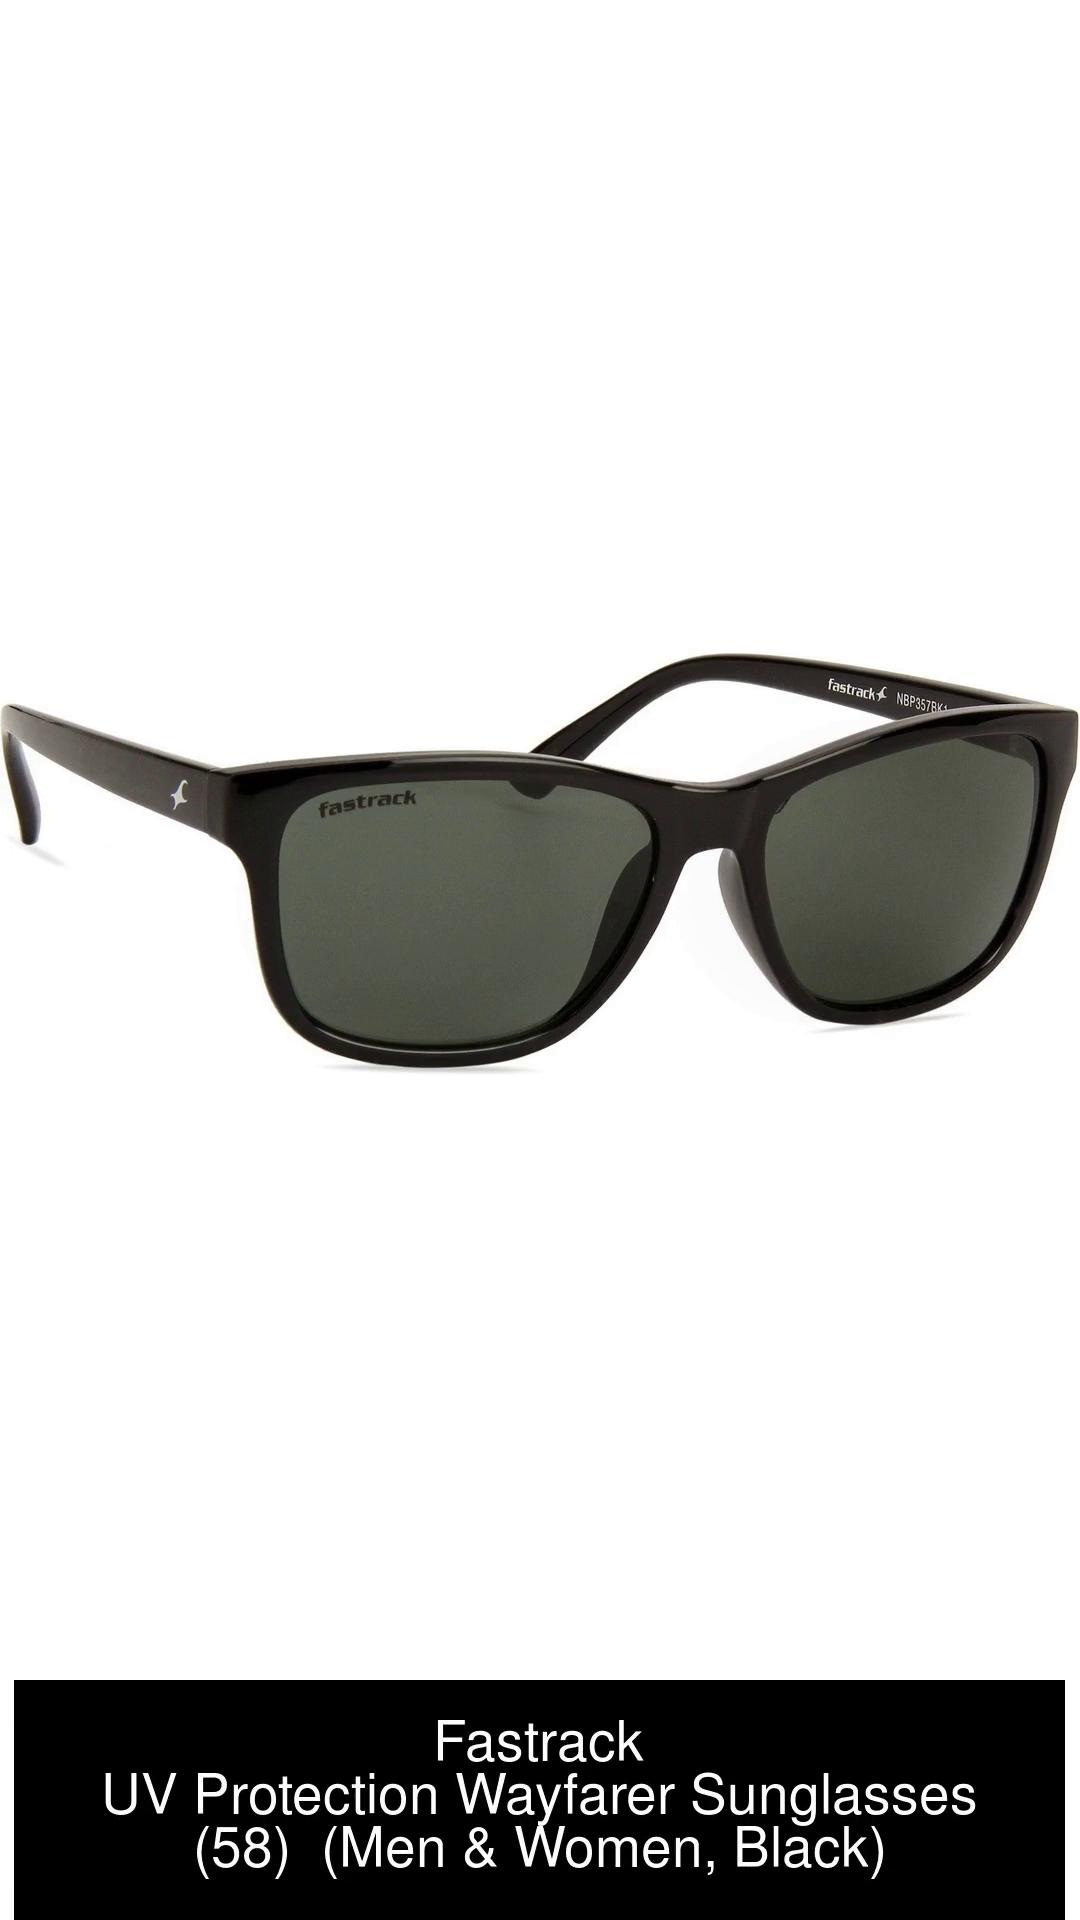 Buy Fastrack Men's Polarized Green Lens Square Sunglasses at Amazon.in